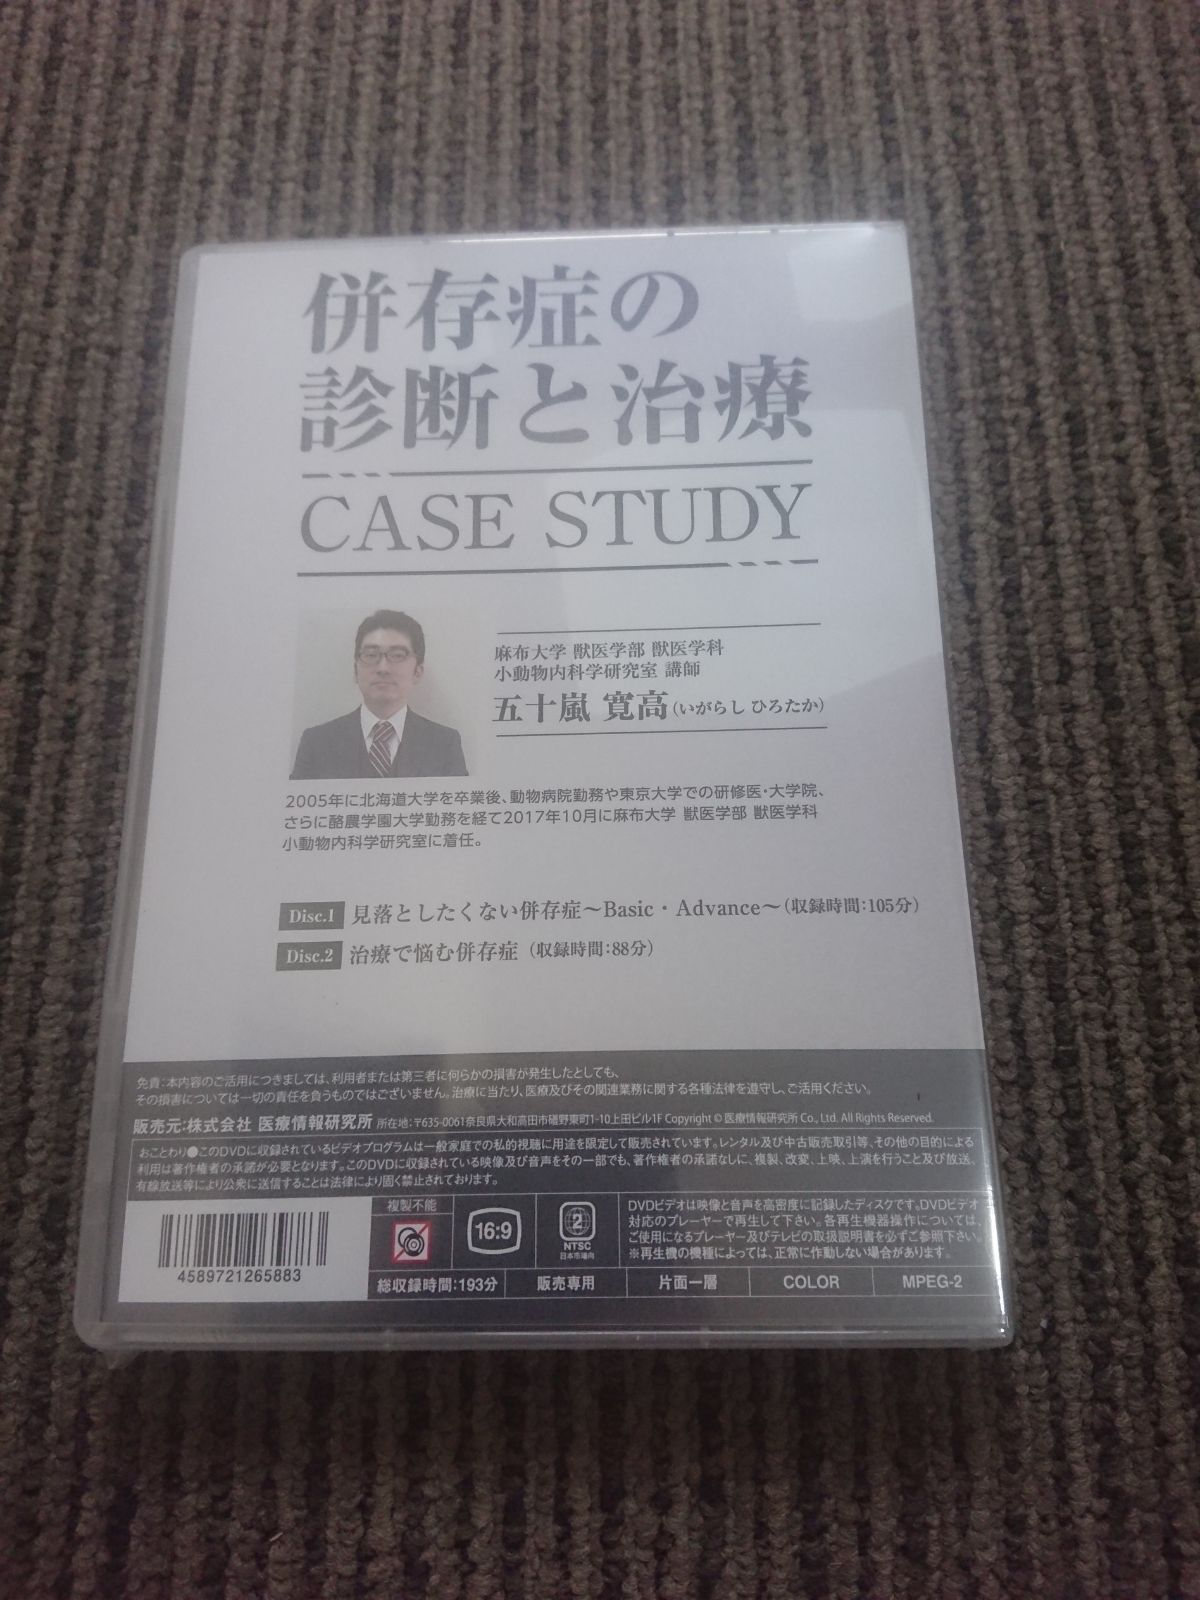 新品DVD / 併存症の診断と治療 CASE STRAY / 五十嵐寛高